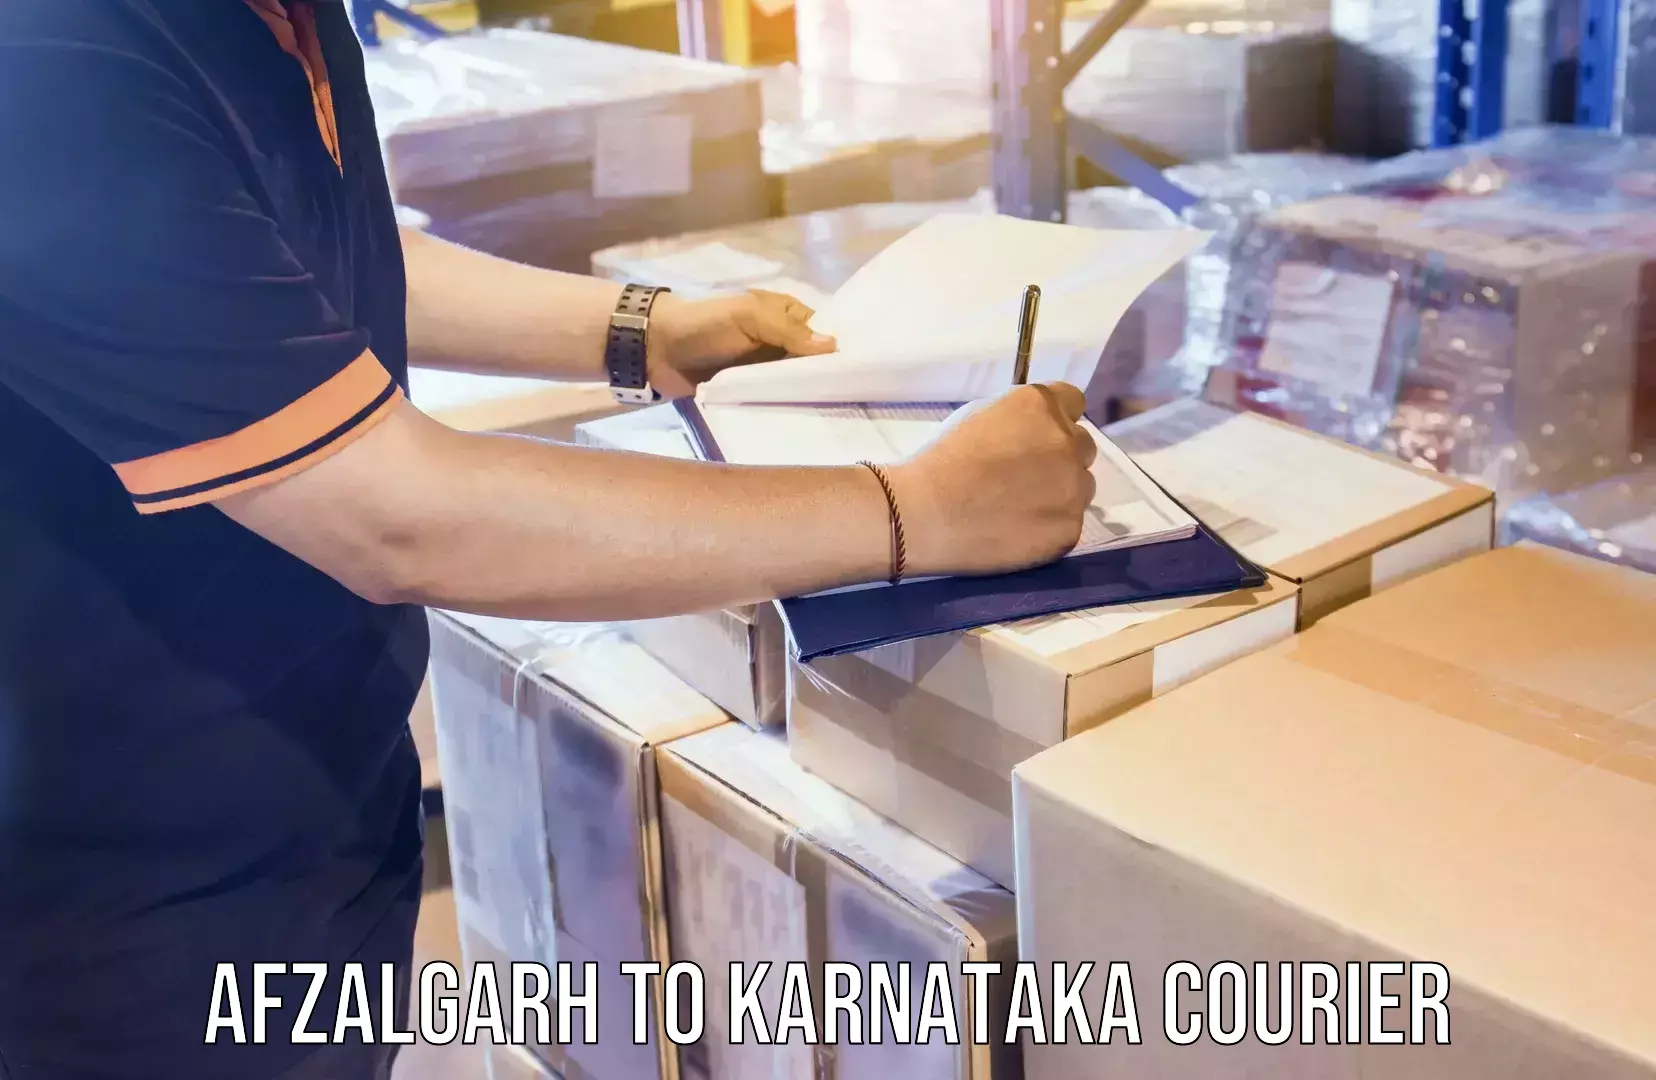 Courier service innovation Afzalgarh to Karnataka